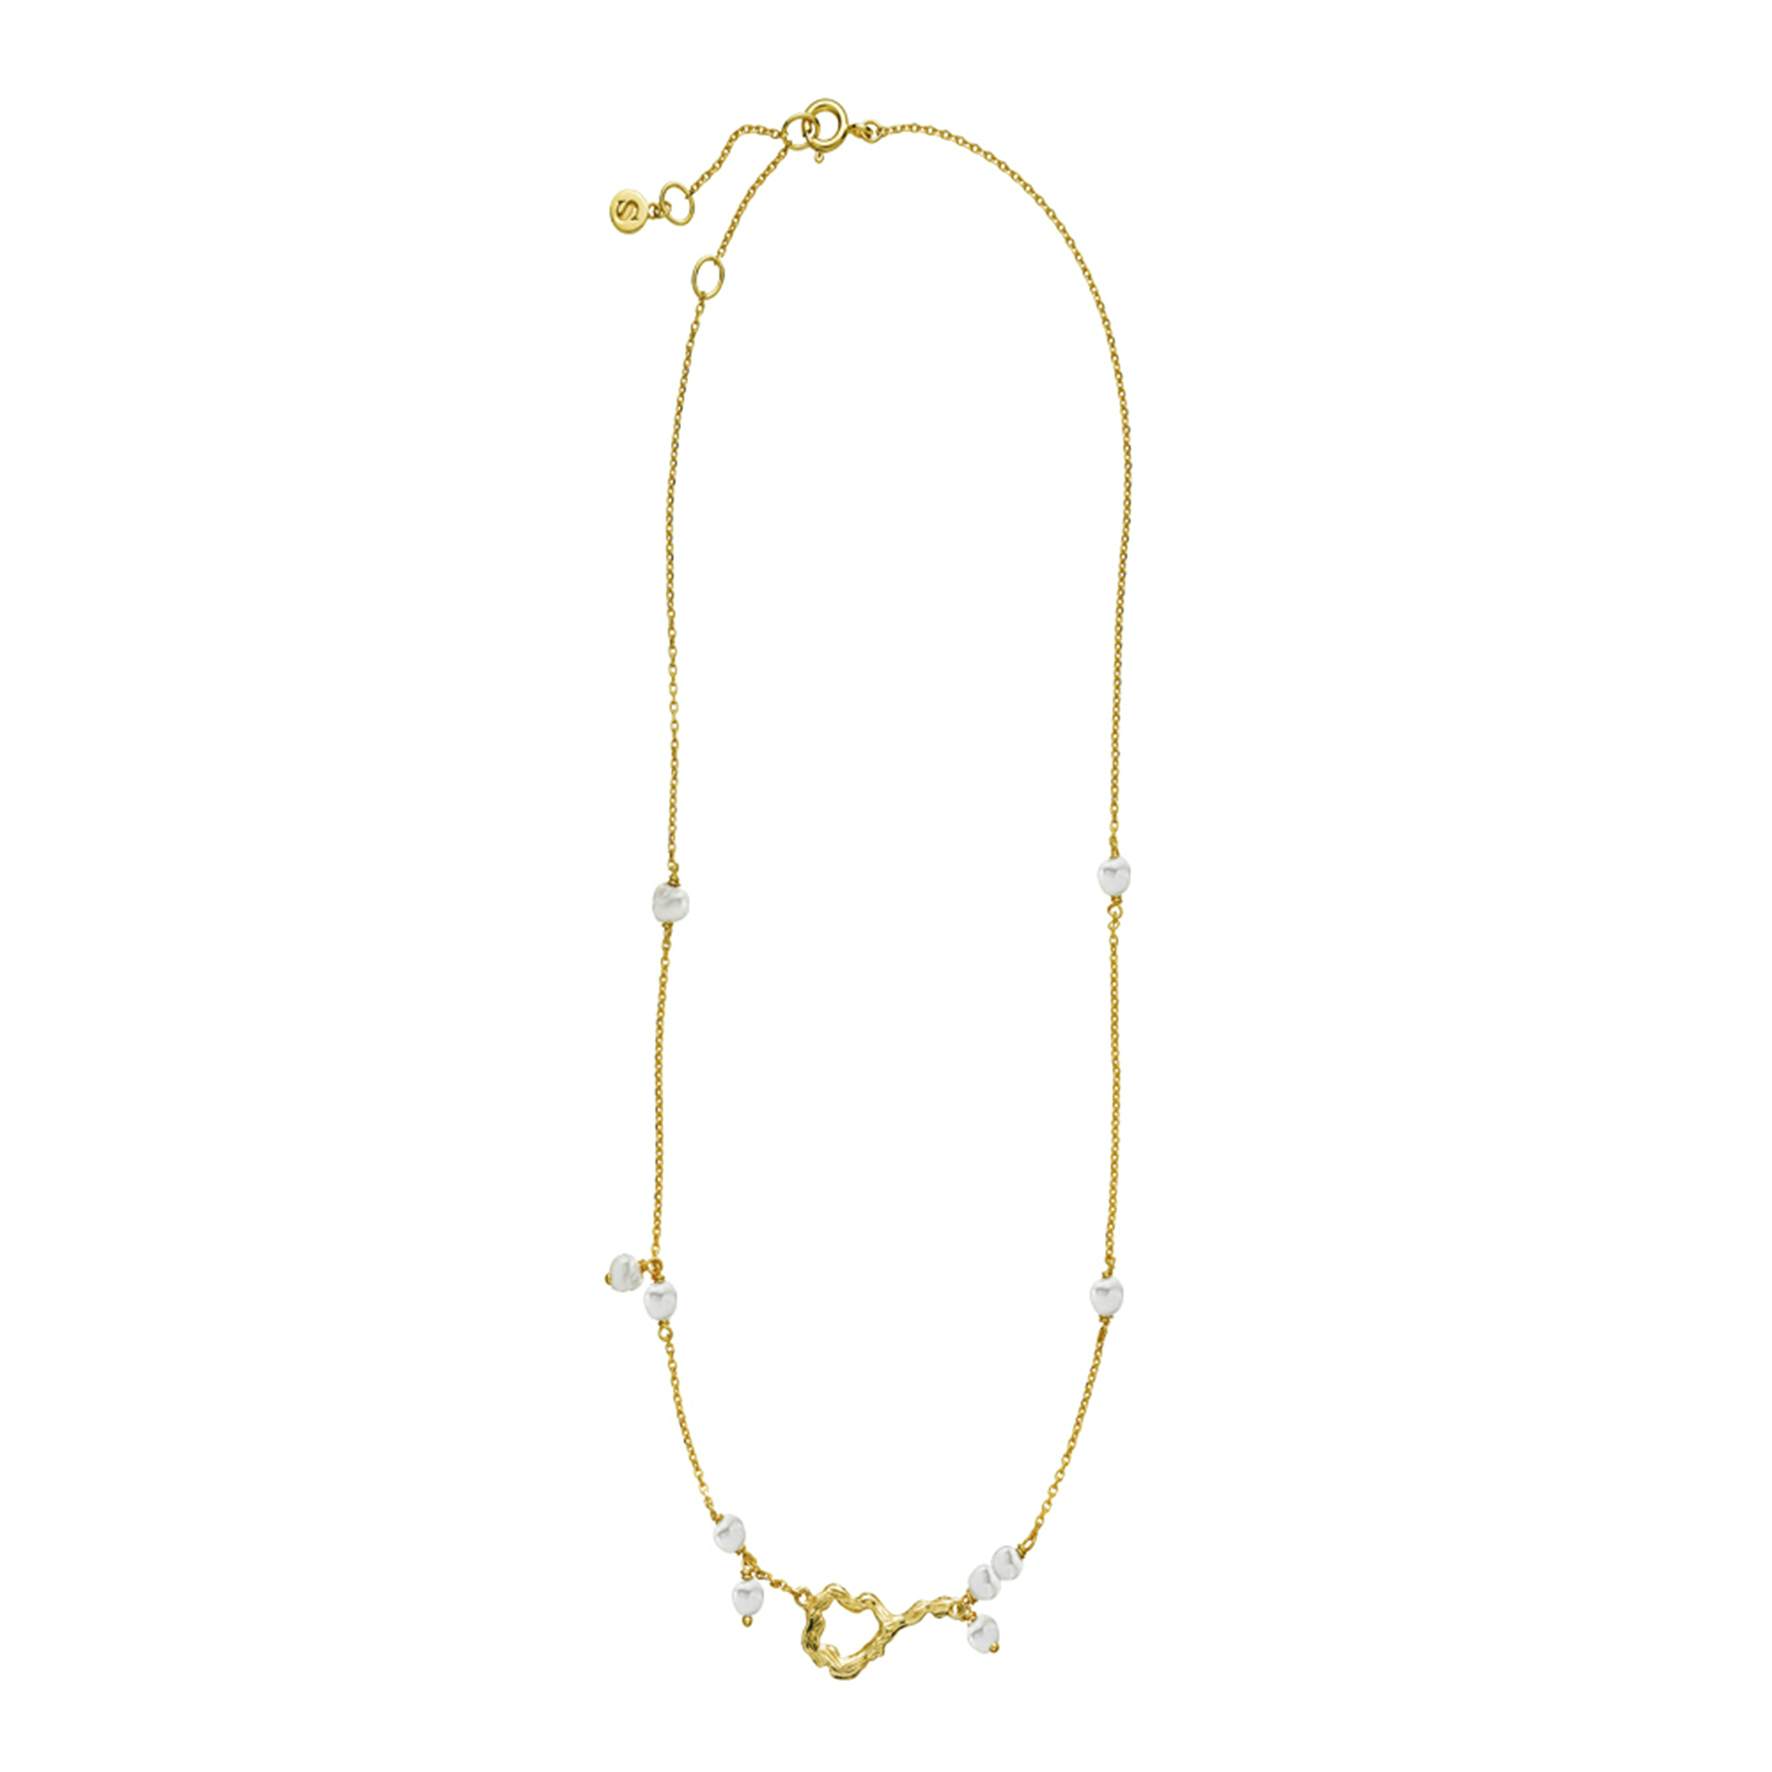 Lærke Bentsen By Sistie Necklace With Pearls fra Sistie i Forgyldt-Sølv Sterling 925|Freshwater Pearl